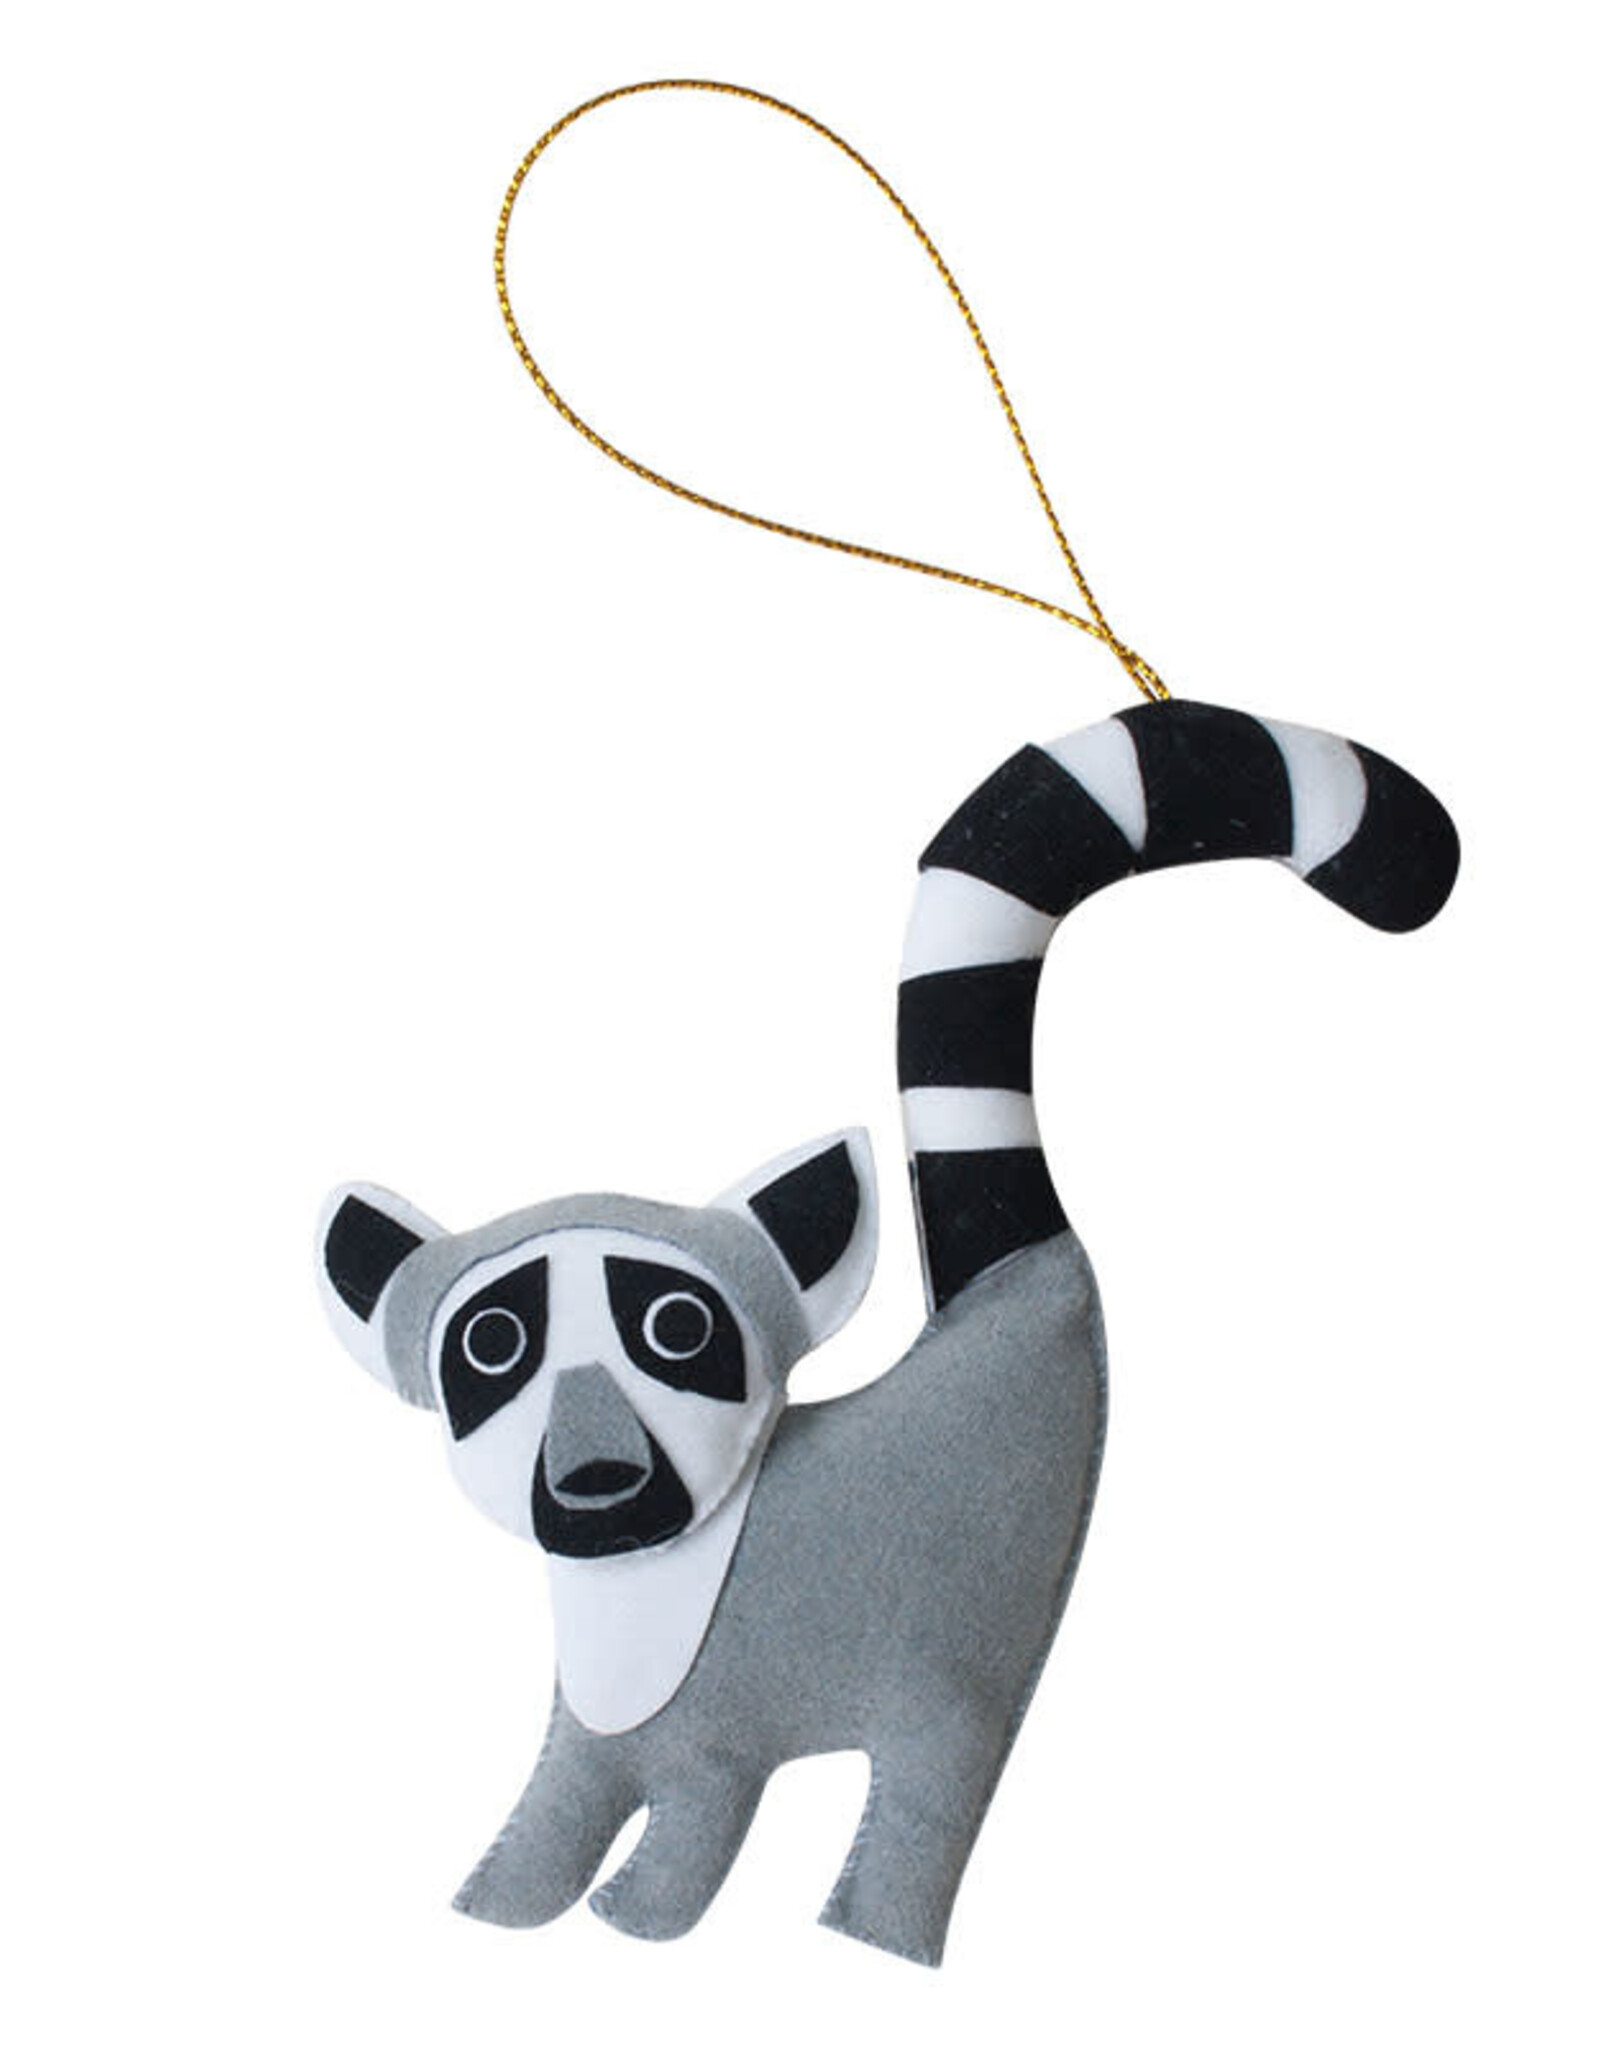 Marquet Felt Lemur Ornament